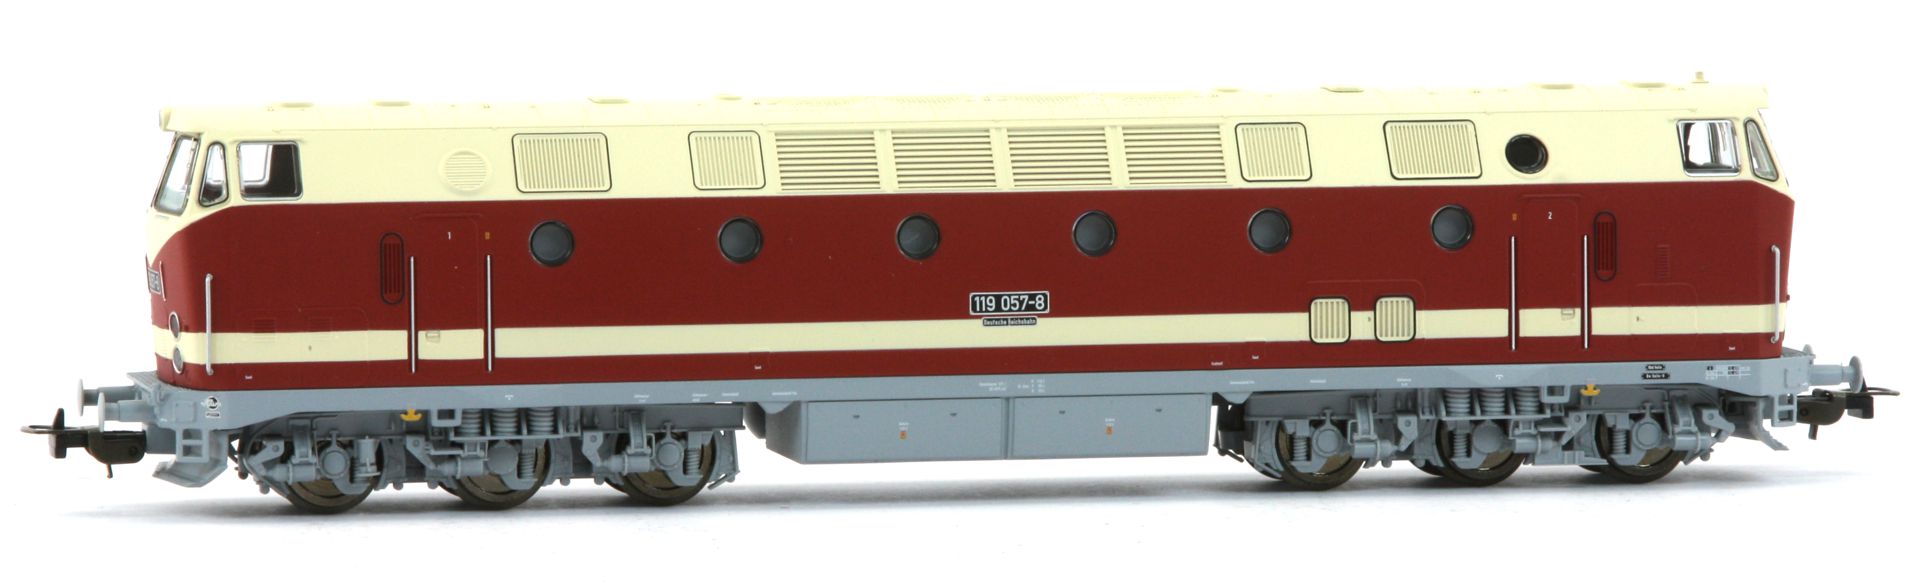 Piko 59930-5 - Diesellok 119 057-8, DR, Ep.IV